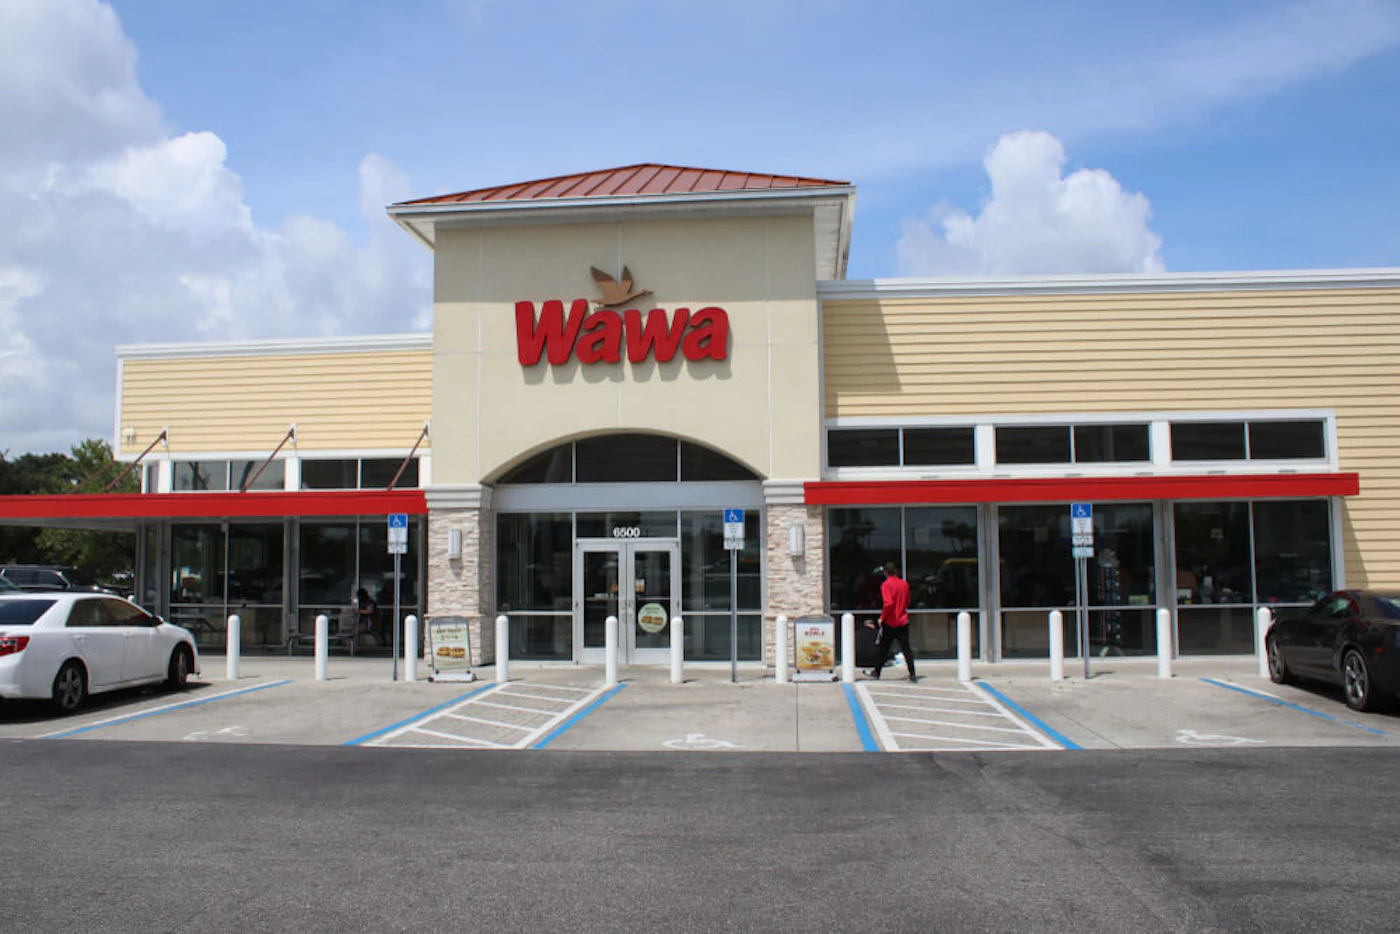 North Carolina is finally getting a Wawa, the popular convenience store chain. (Shutterstock)